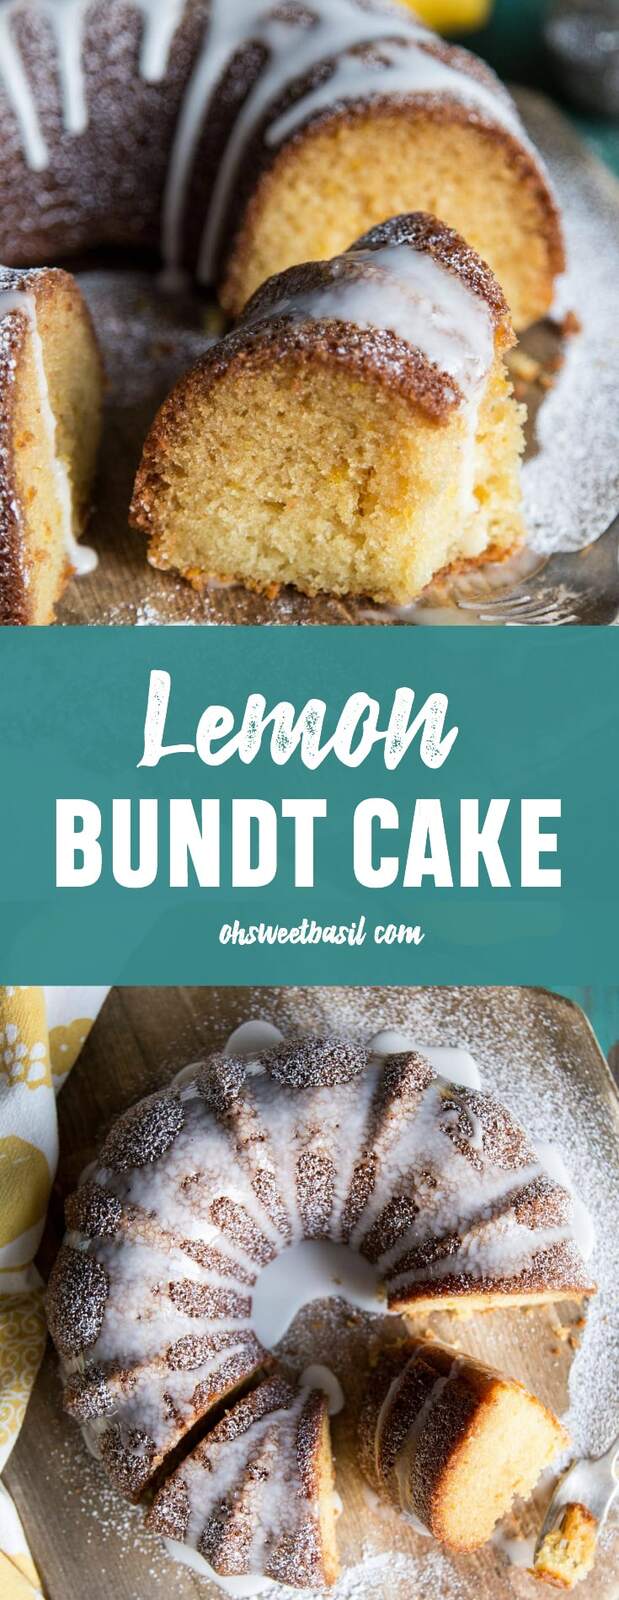 Lemon-Bundt-Cake-ohsweetbasil.com-copy.jpg